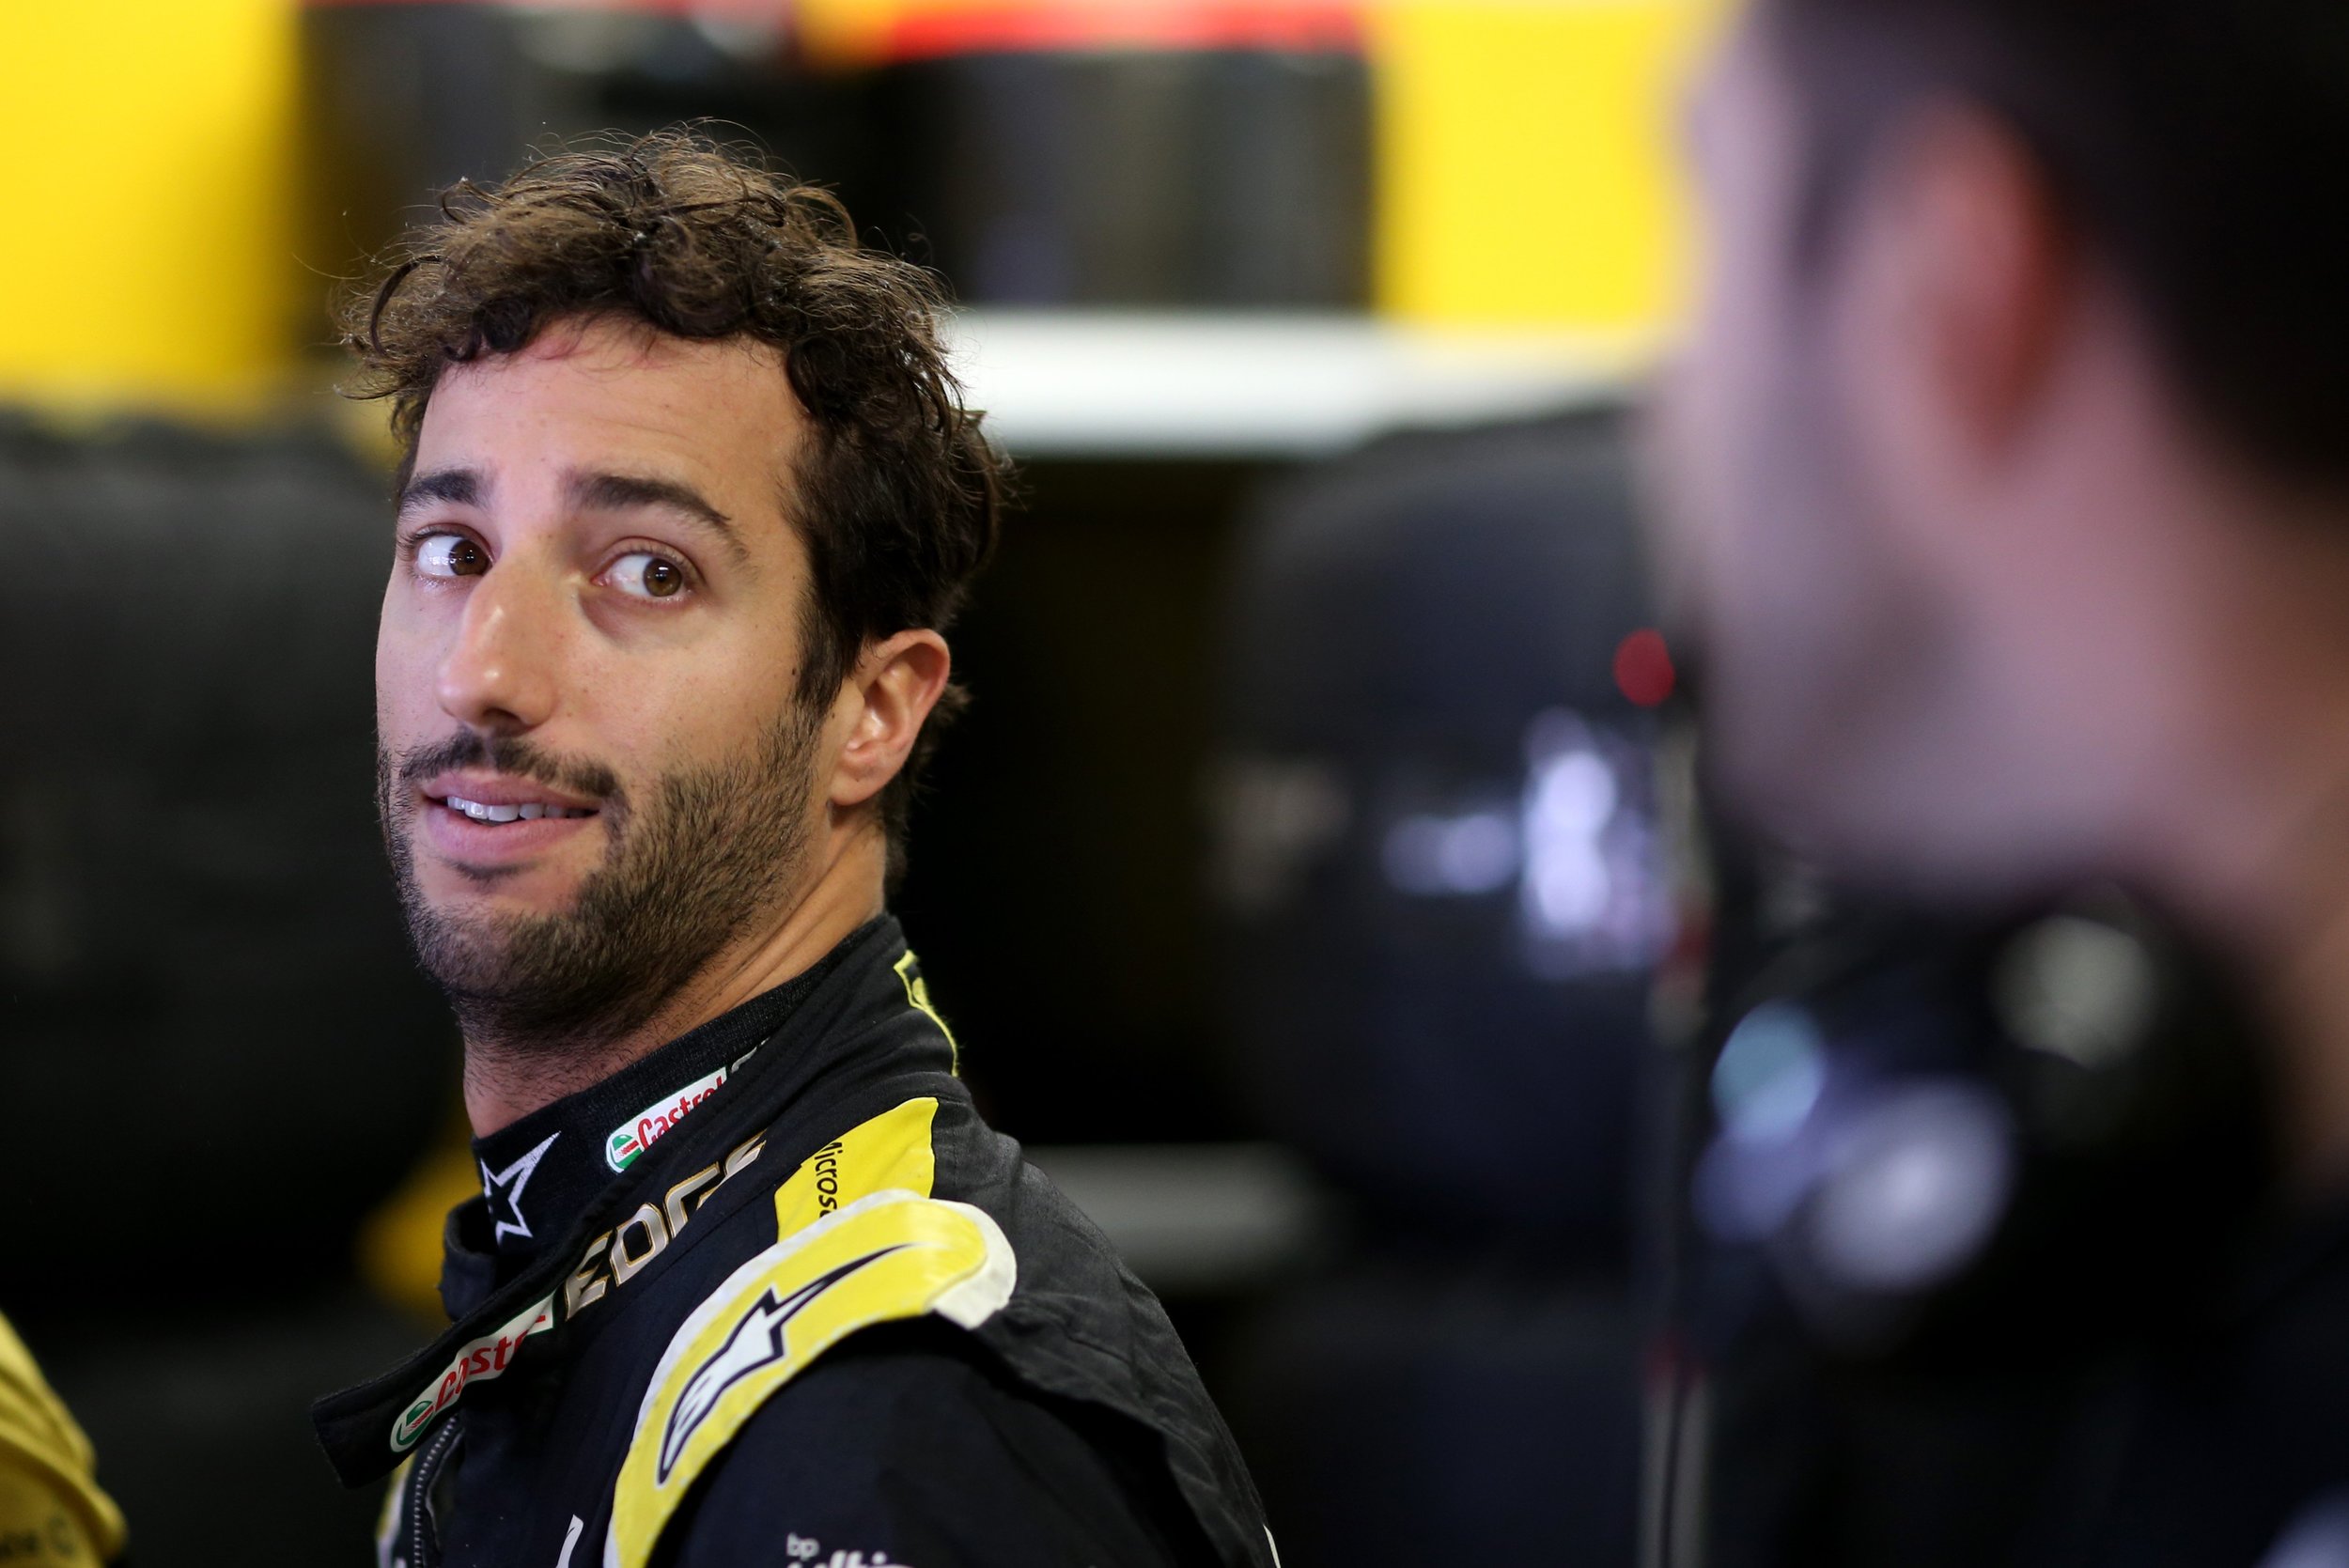 Daniel Ricciardo / Abiteboul Ricciardo Legacy To Remain Part Of Renault